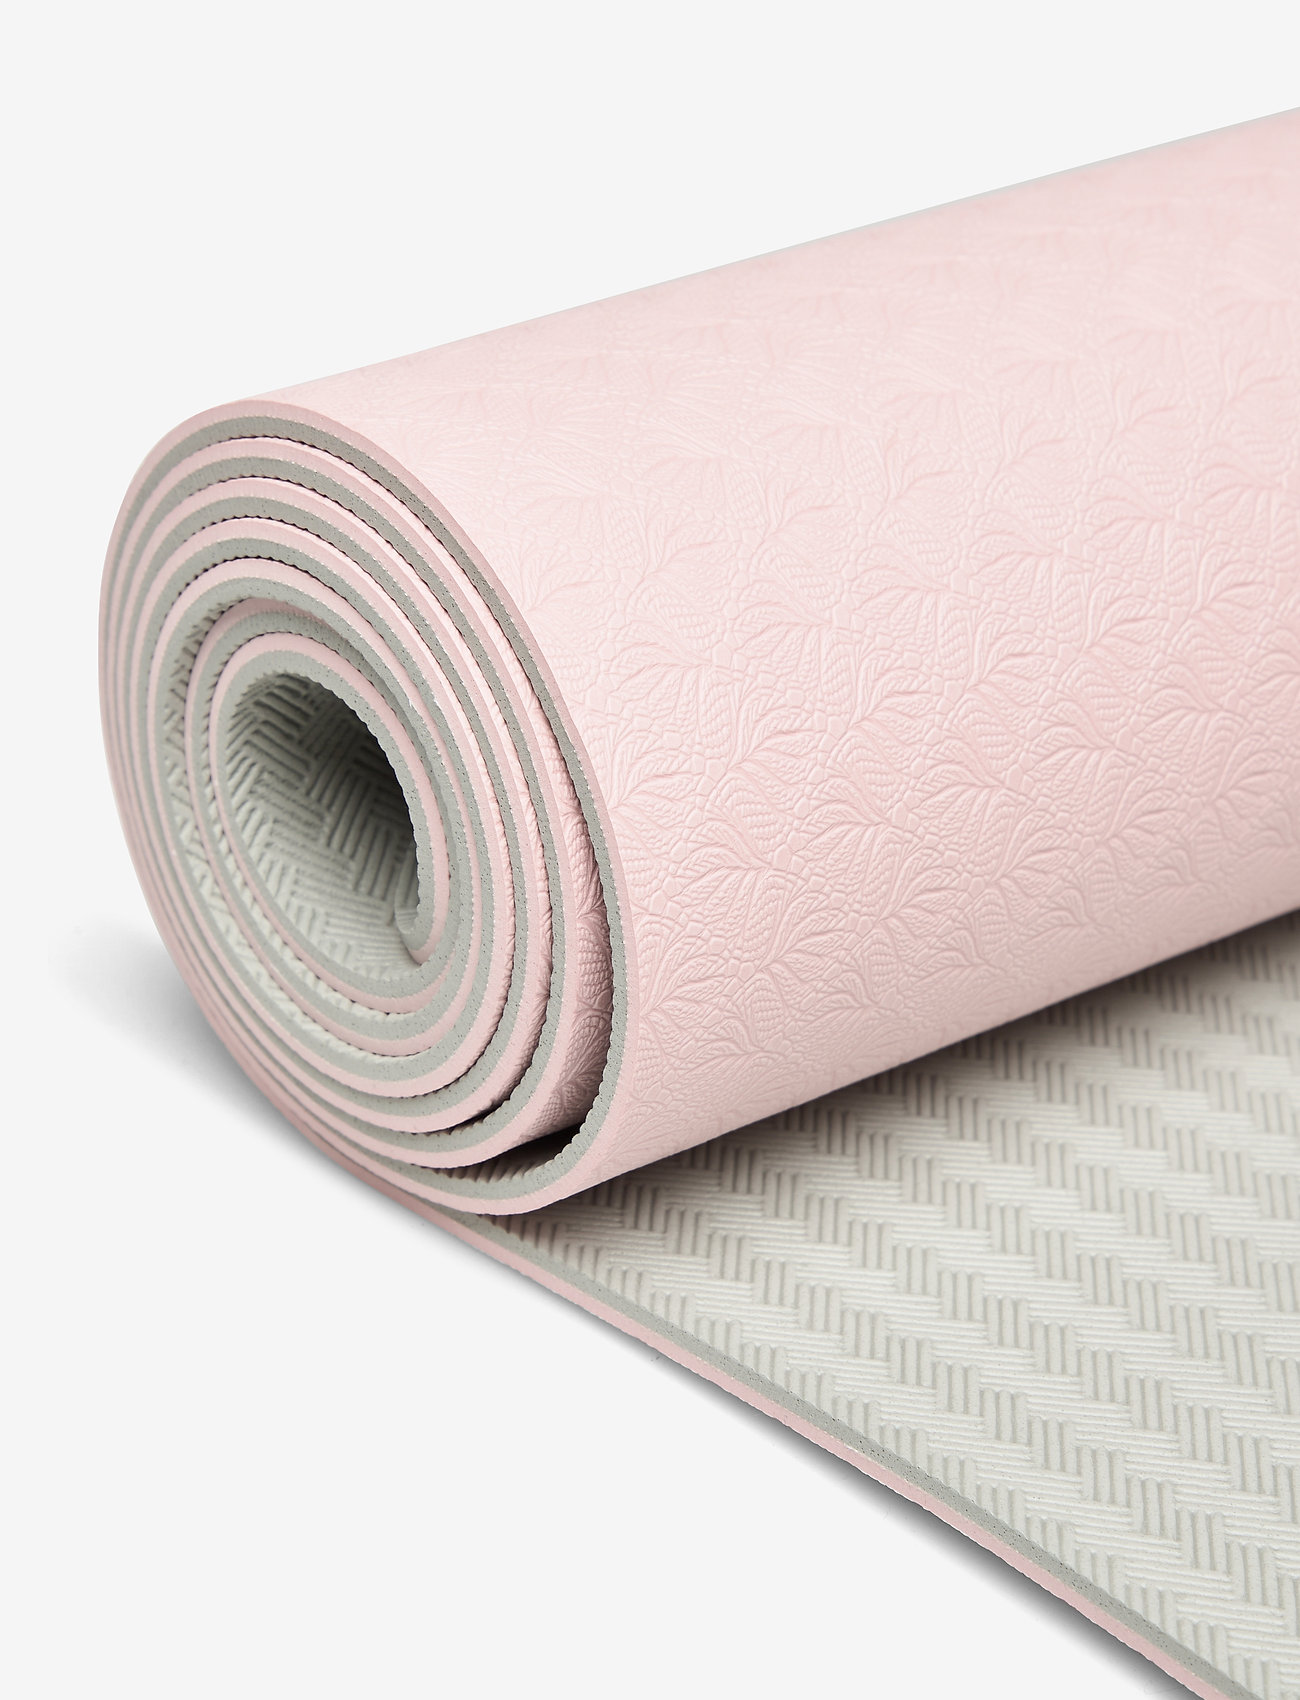 Casall - Yoga mat position 4mm - maty i akcesoria do jogi - lucky pink/grey - 1